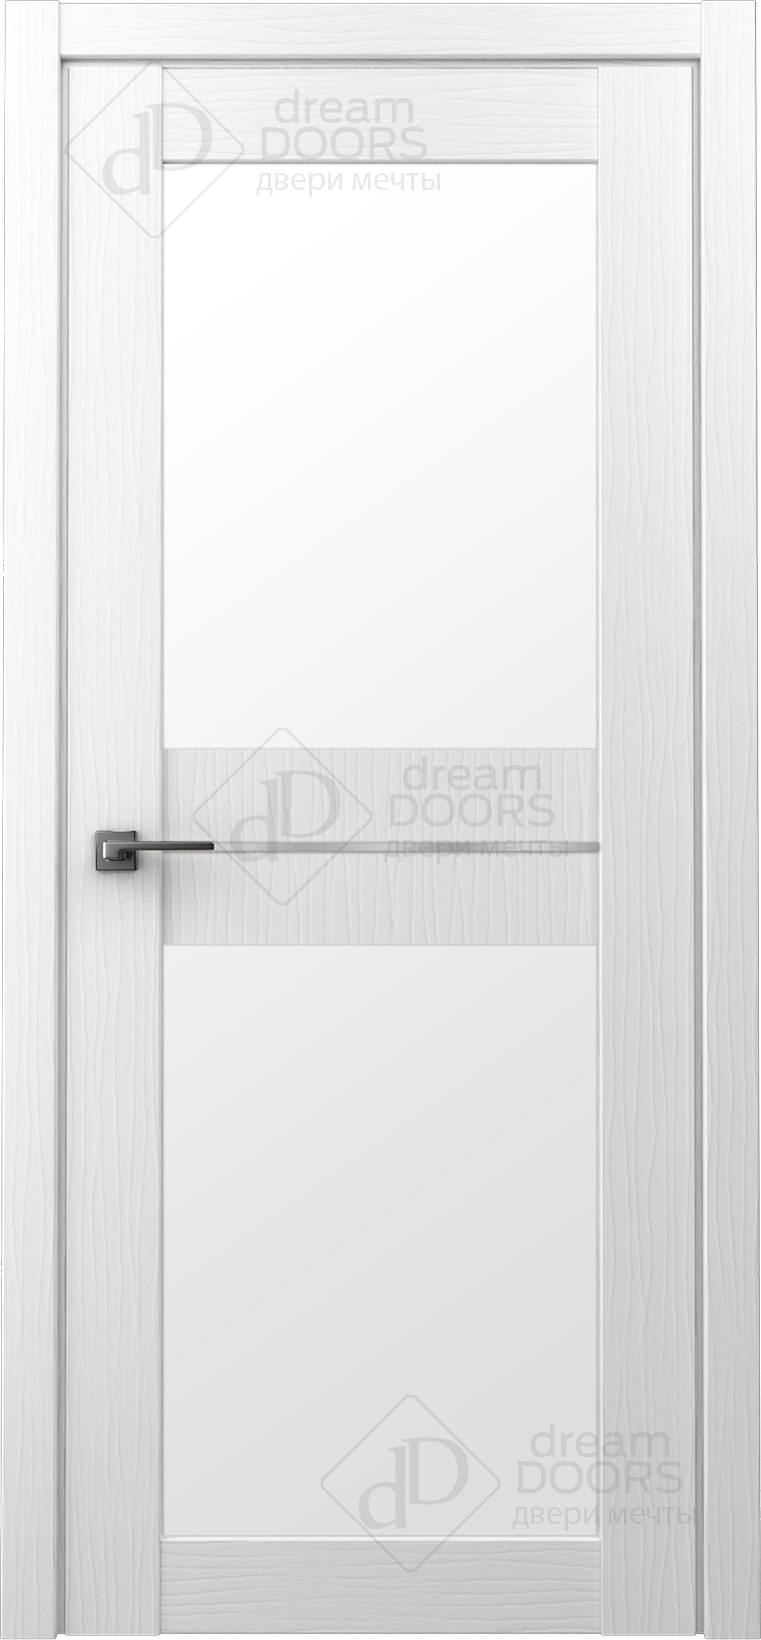 Dream Doors Межкомнатная дверь Престиж 2, арт. 16431 - фото №1